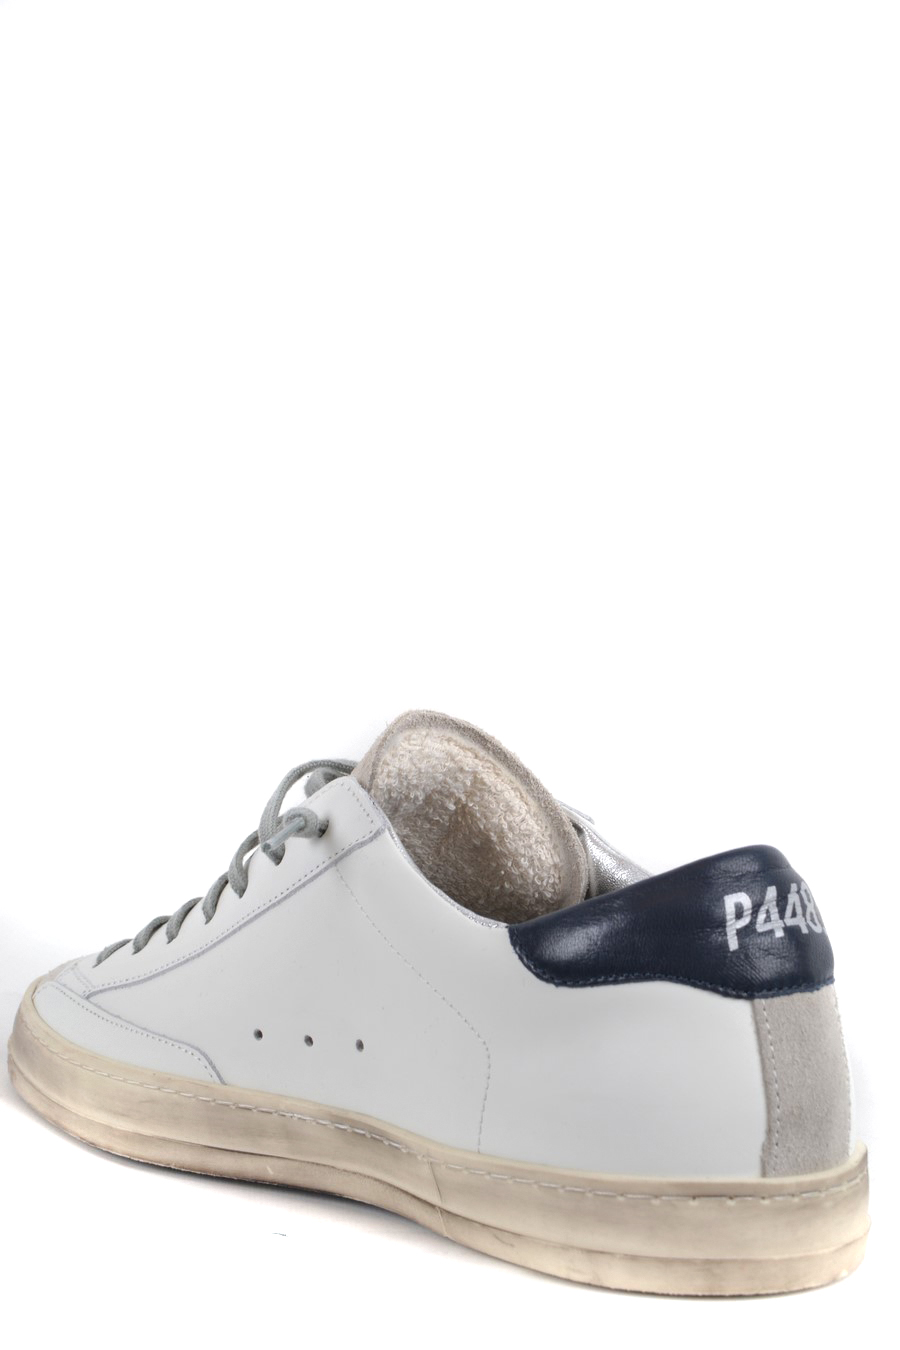 P448 Sneakers 